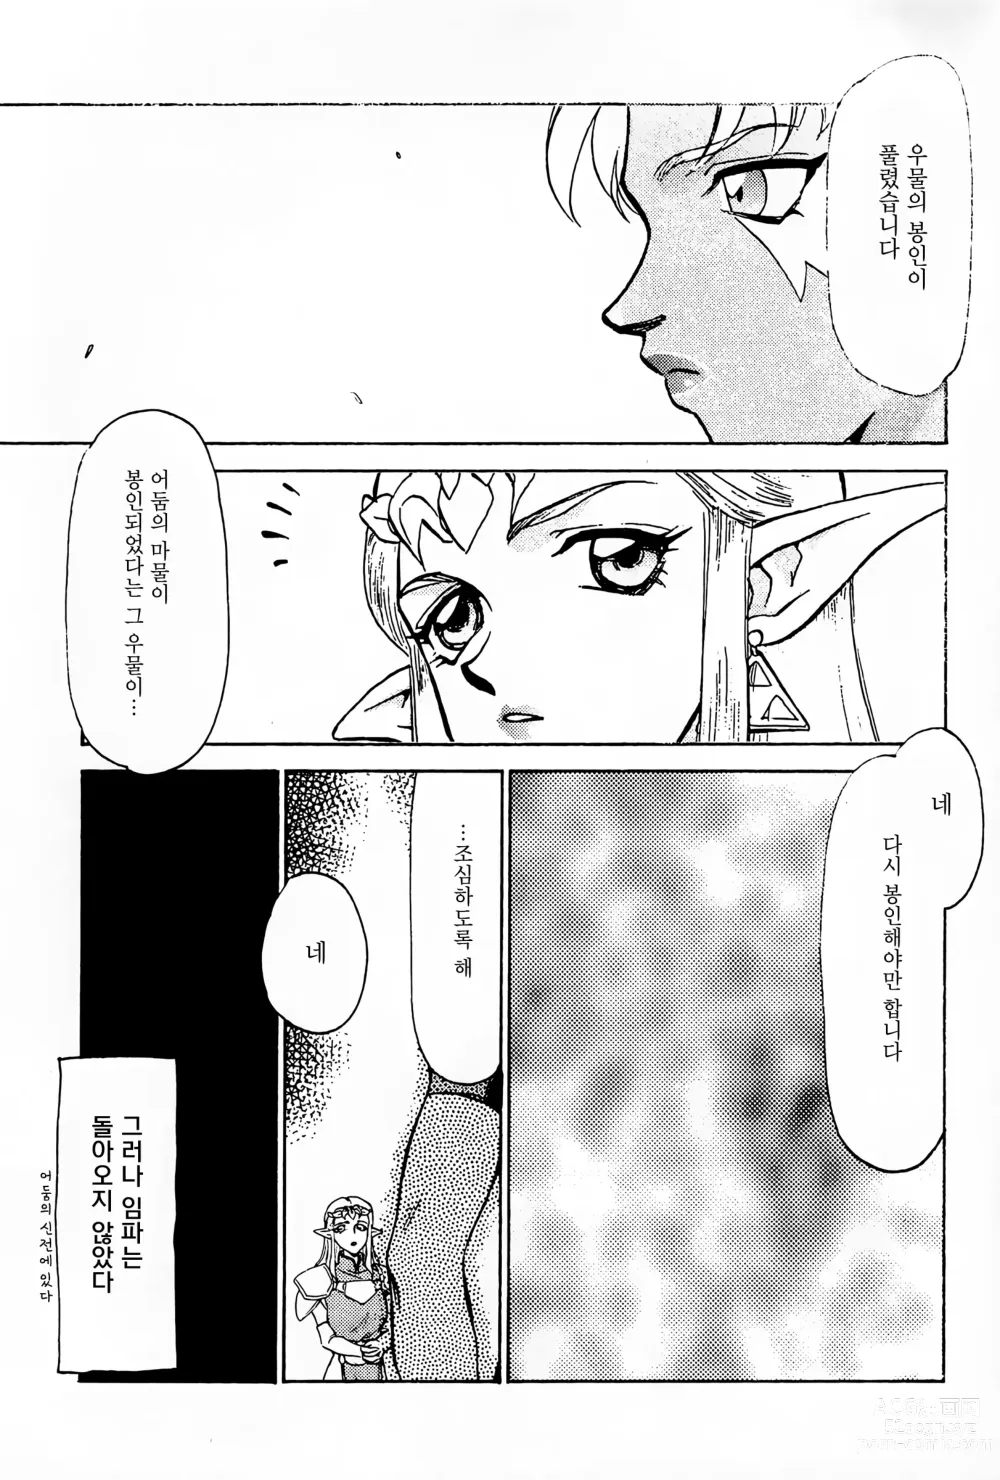 Page 10 of doujinshi NISE Zelda no Densetsu Prologue